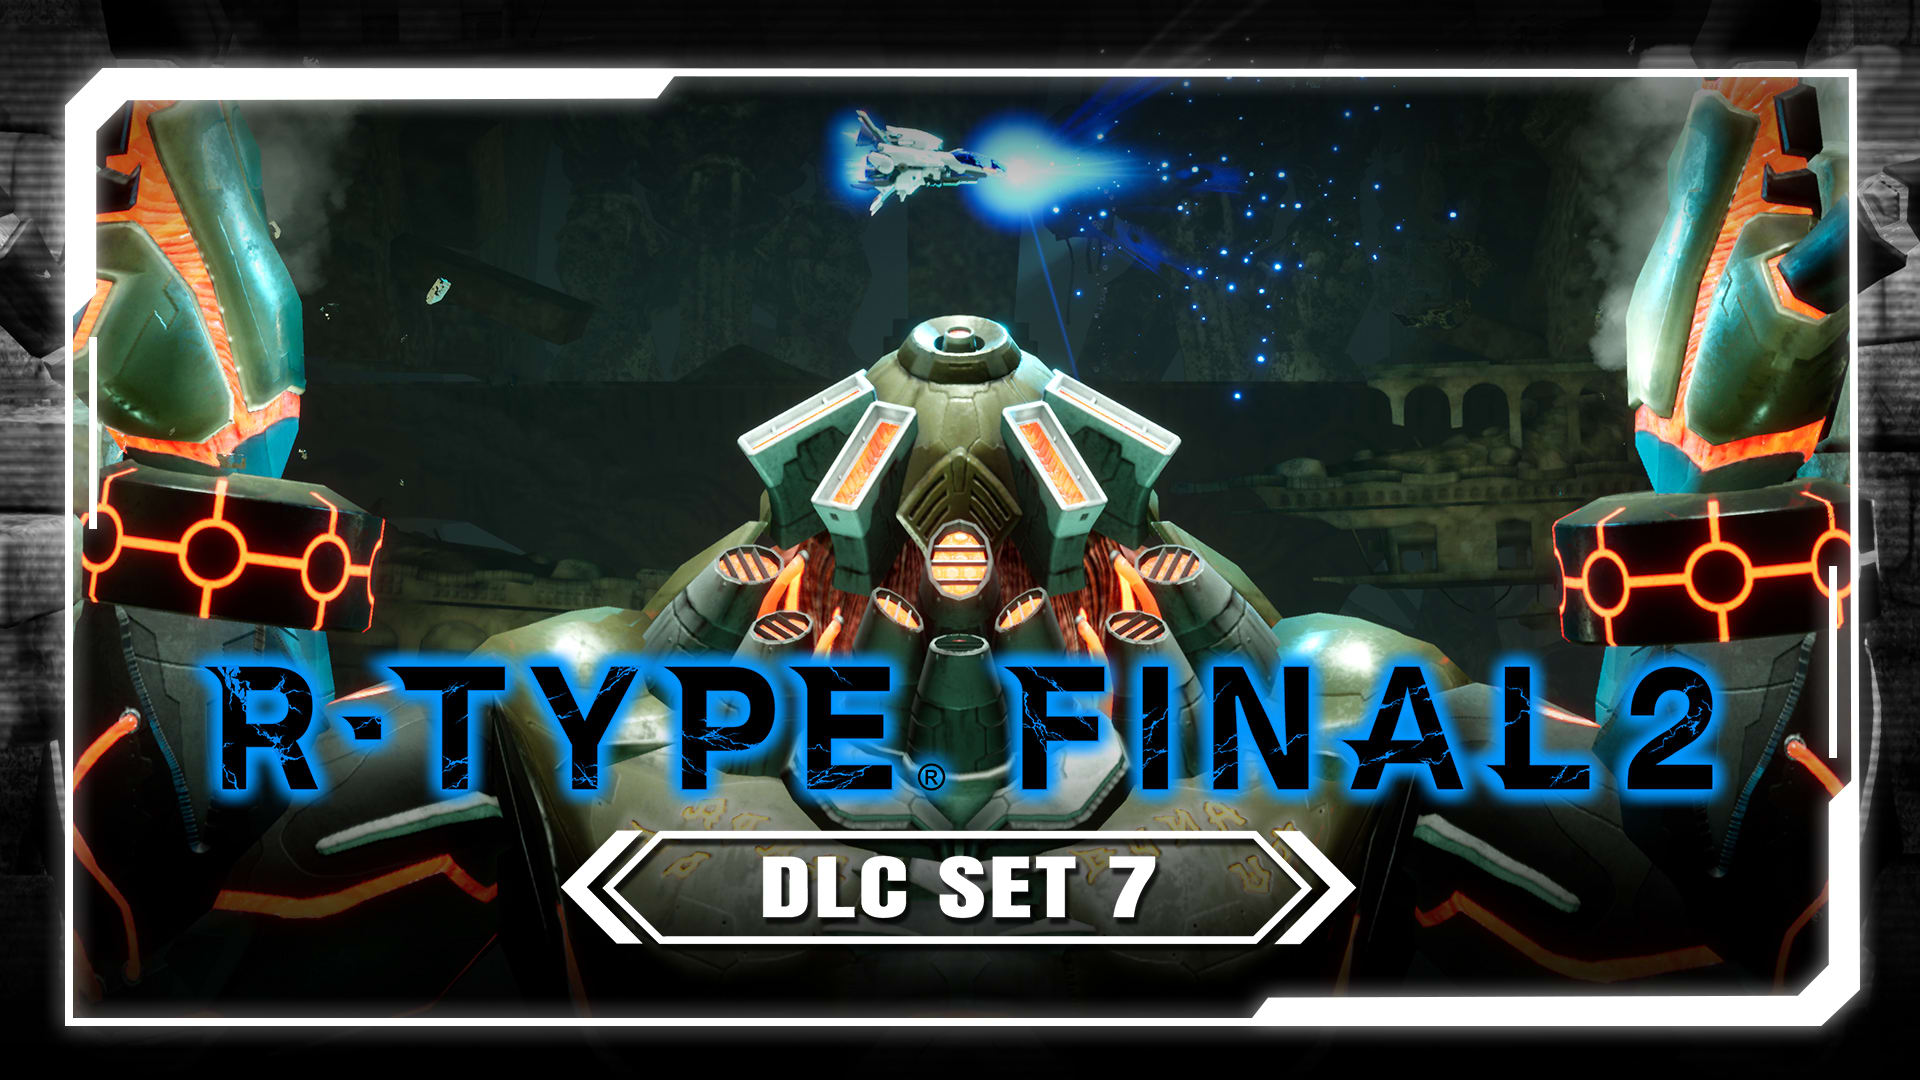 R-Type Final 2: DLC Set 7